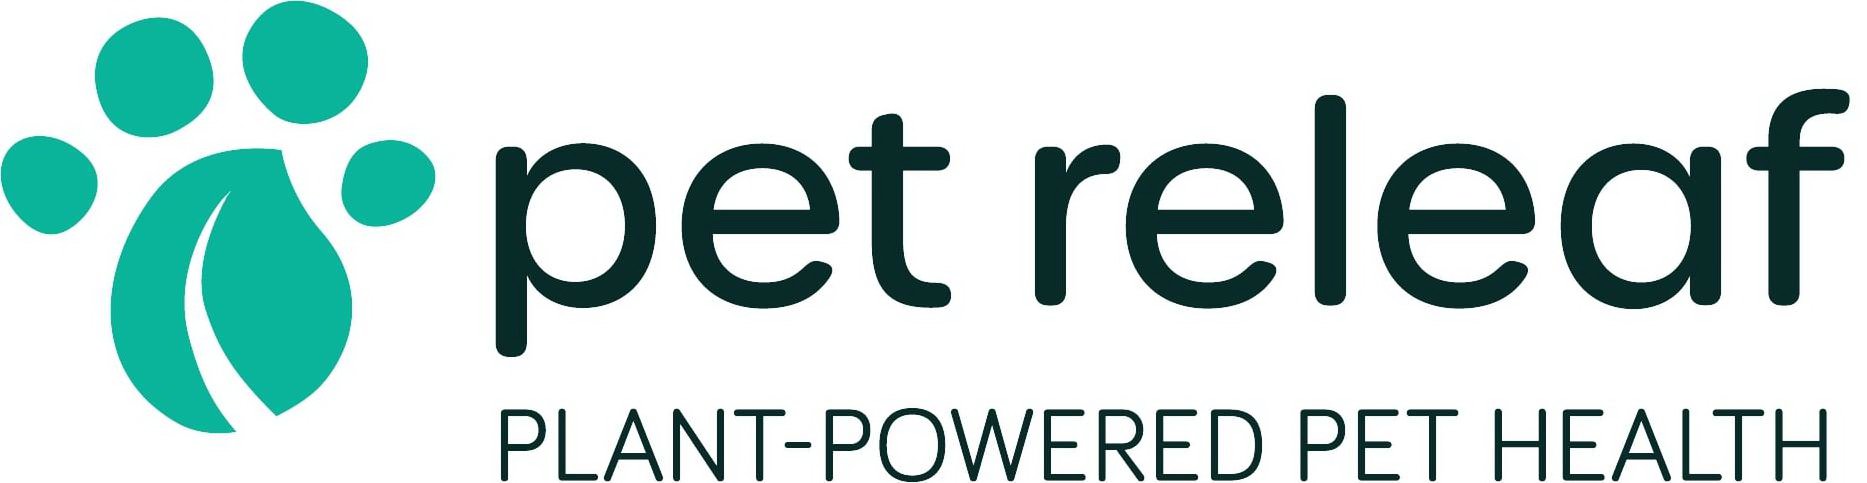 PET RELEAF PLANT-POWERED PET HEALTH